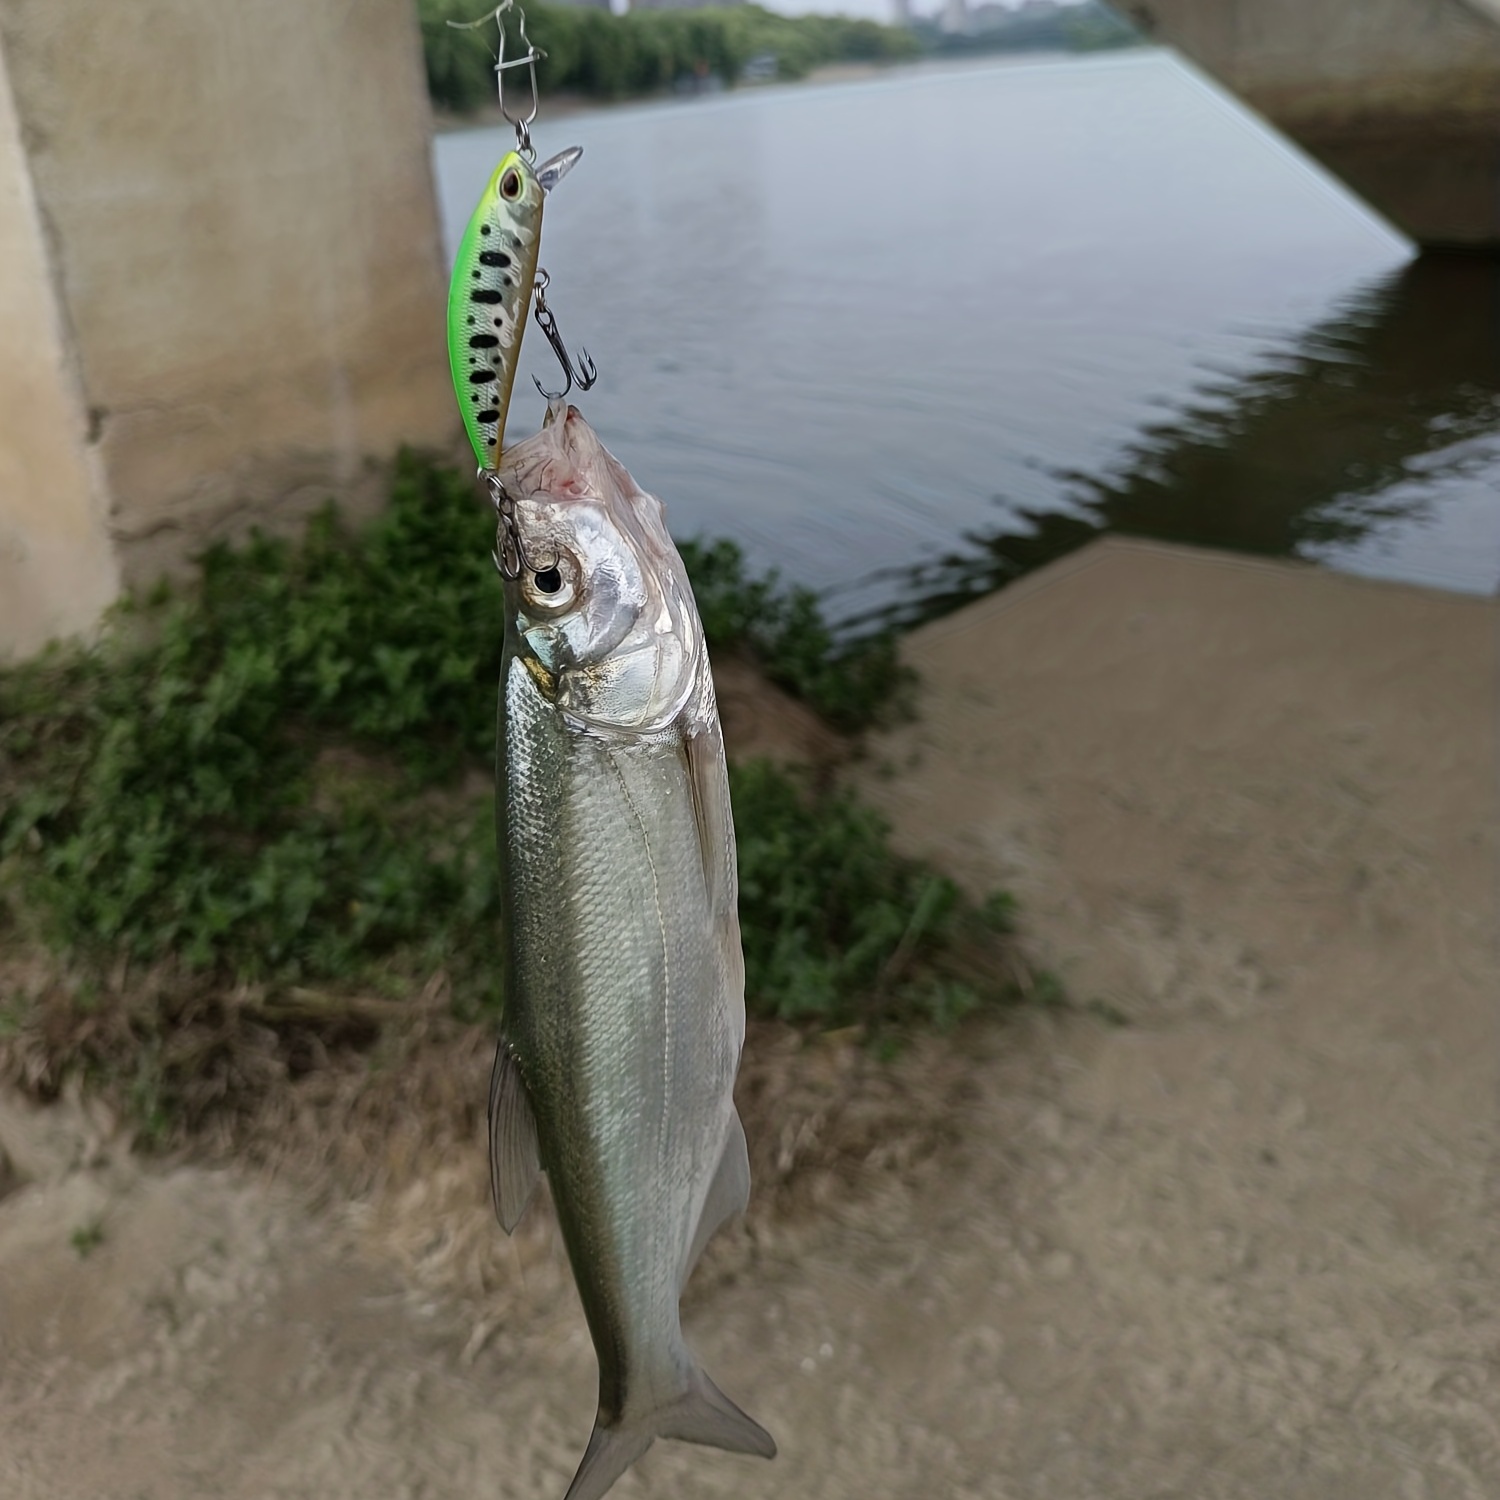 8pcs/lot Mini Minnow Fishing Lure Wobblers - 5cm/1.96in 2.2g Artificial  Hard Bait Jerkbait Tackle Trolling Carp Pike Bass Pesca